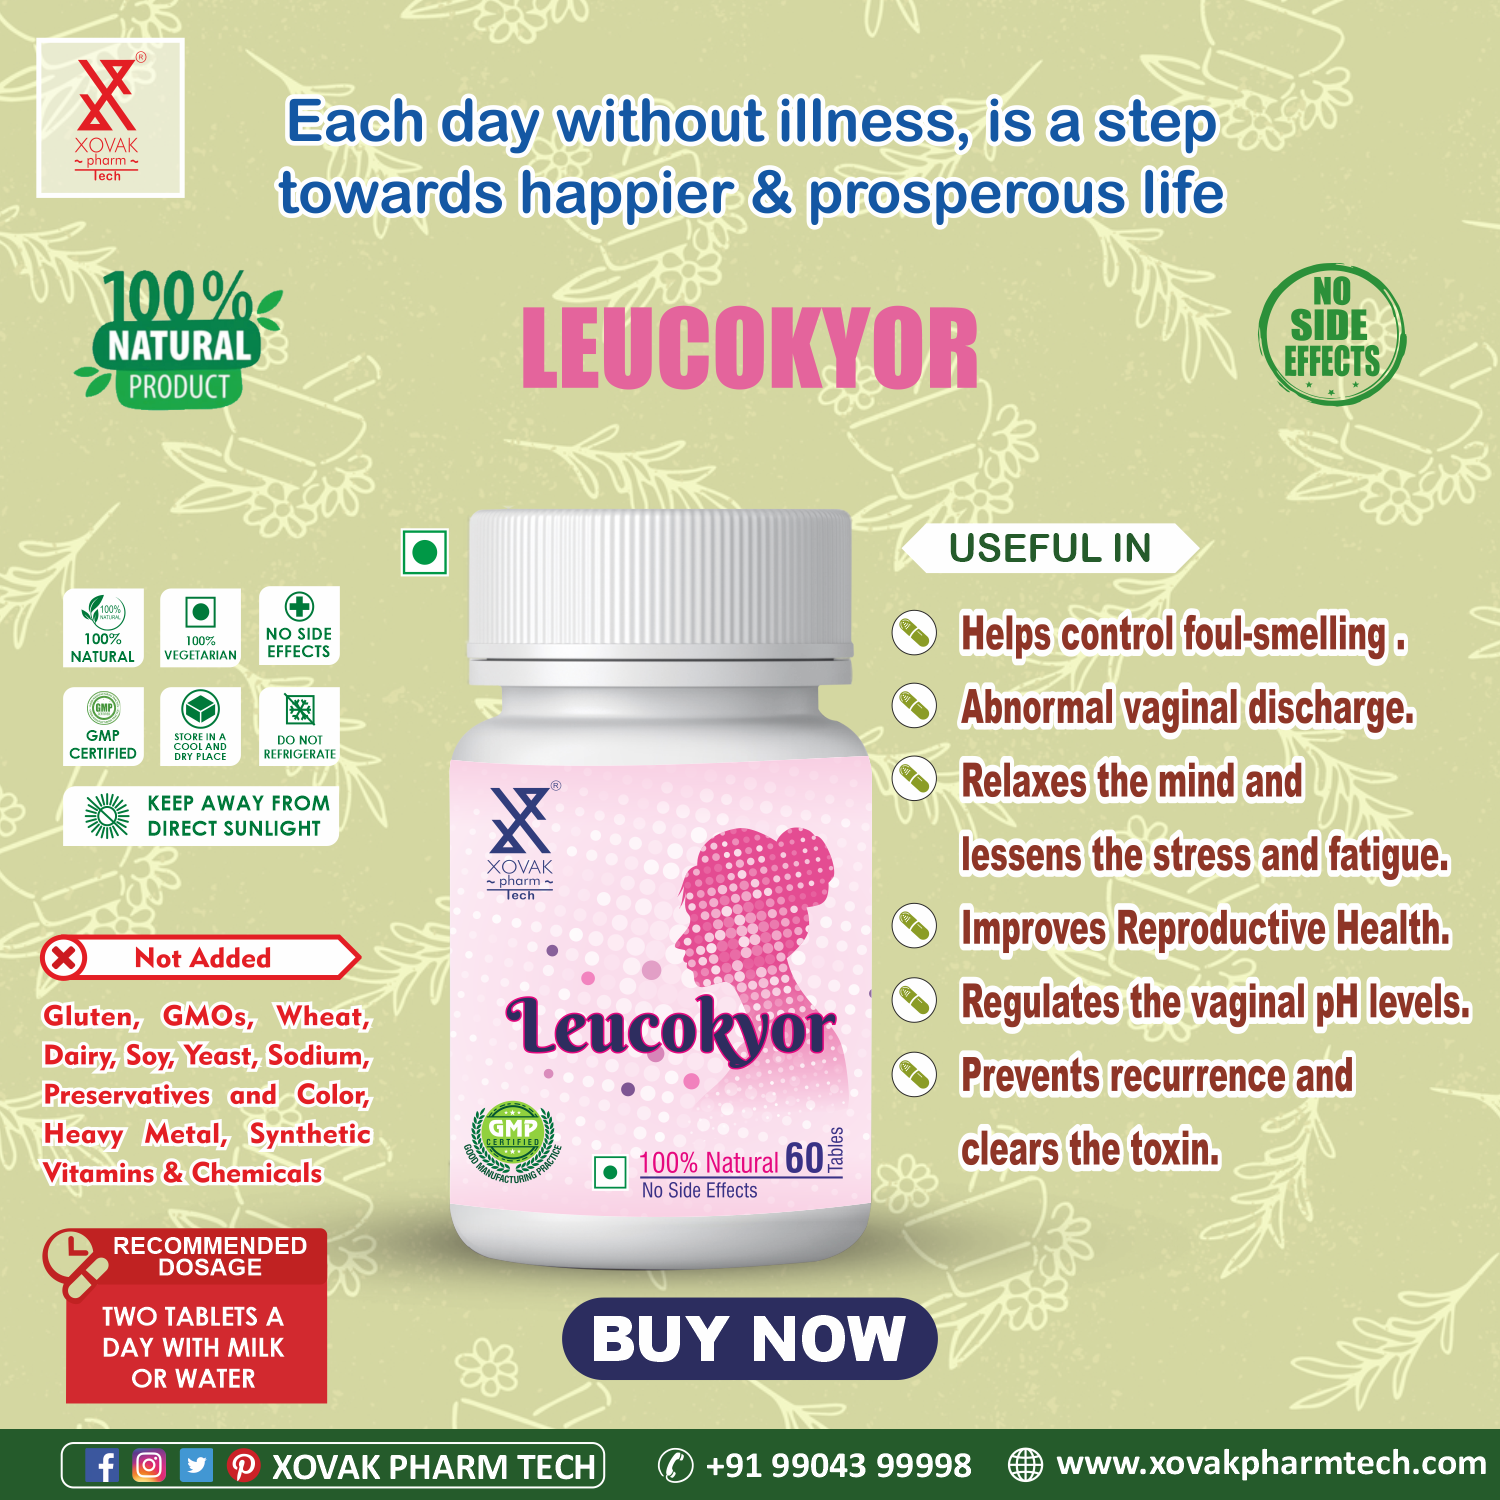 Buy Xovak Ayurvedic Leuockyor (60 Tablets) at Best Price Online